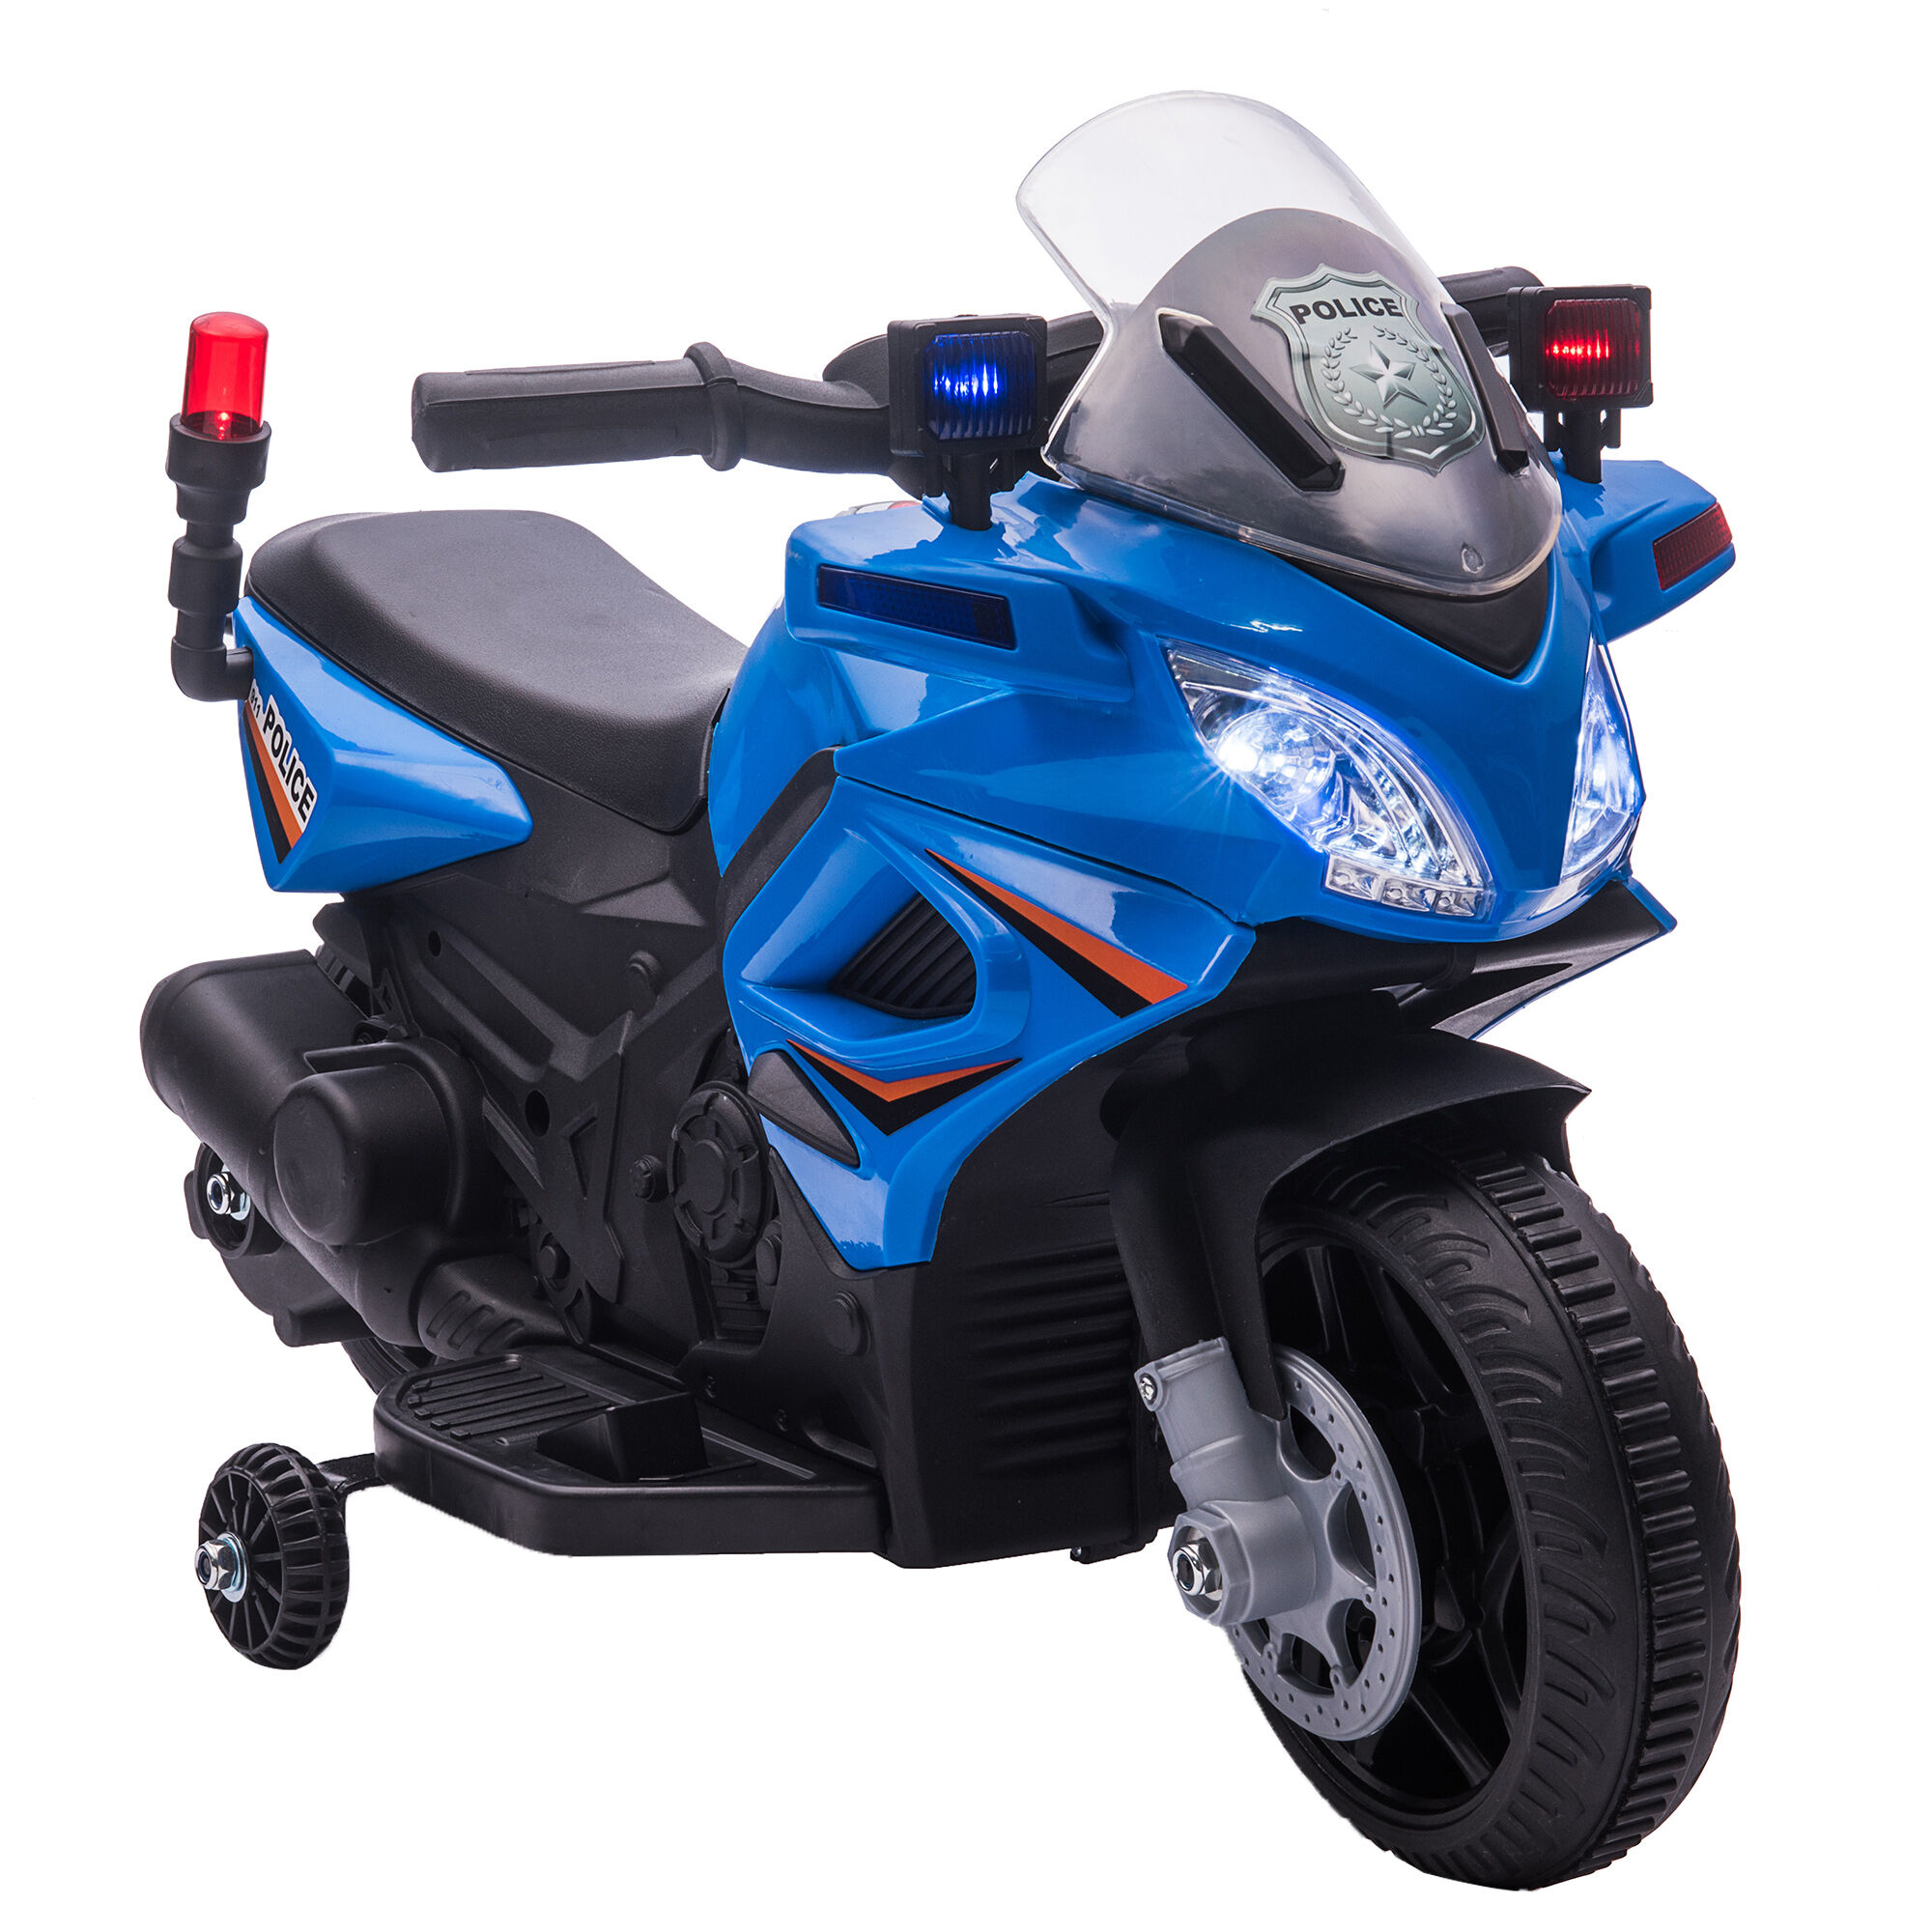 Aosom Kids Police Electric Motorbike 6V Ride-On Off-road Street Bike with Horn Headlights Training Wheels Sounds Blue   Aosom.com